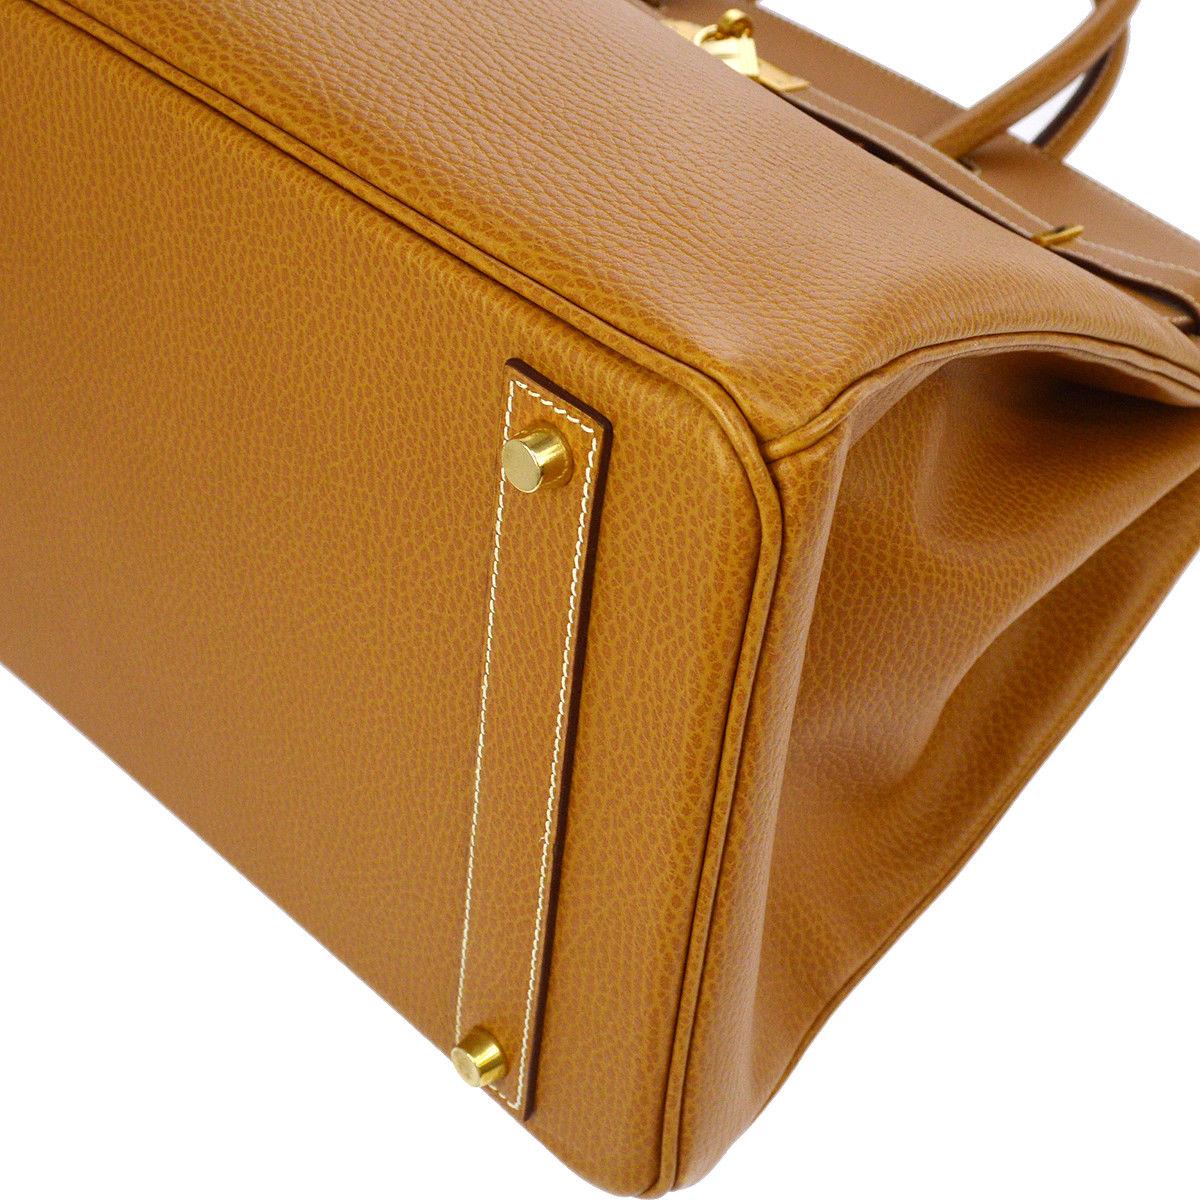 Hermes Birkin 40 Cognac Leather Gold Travel Carryall Top Handle Satchel Tote 3